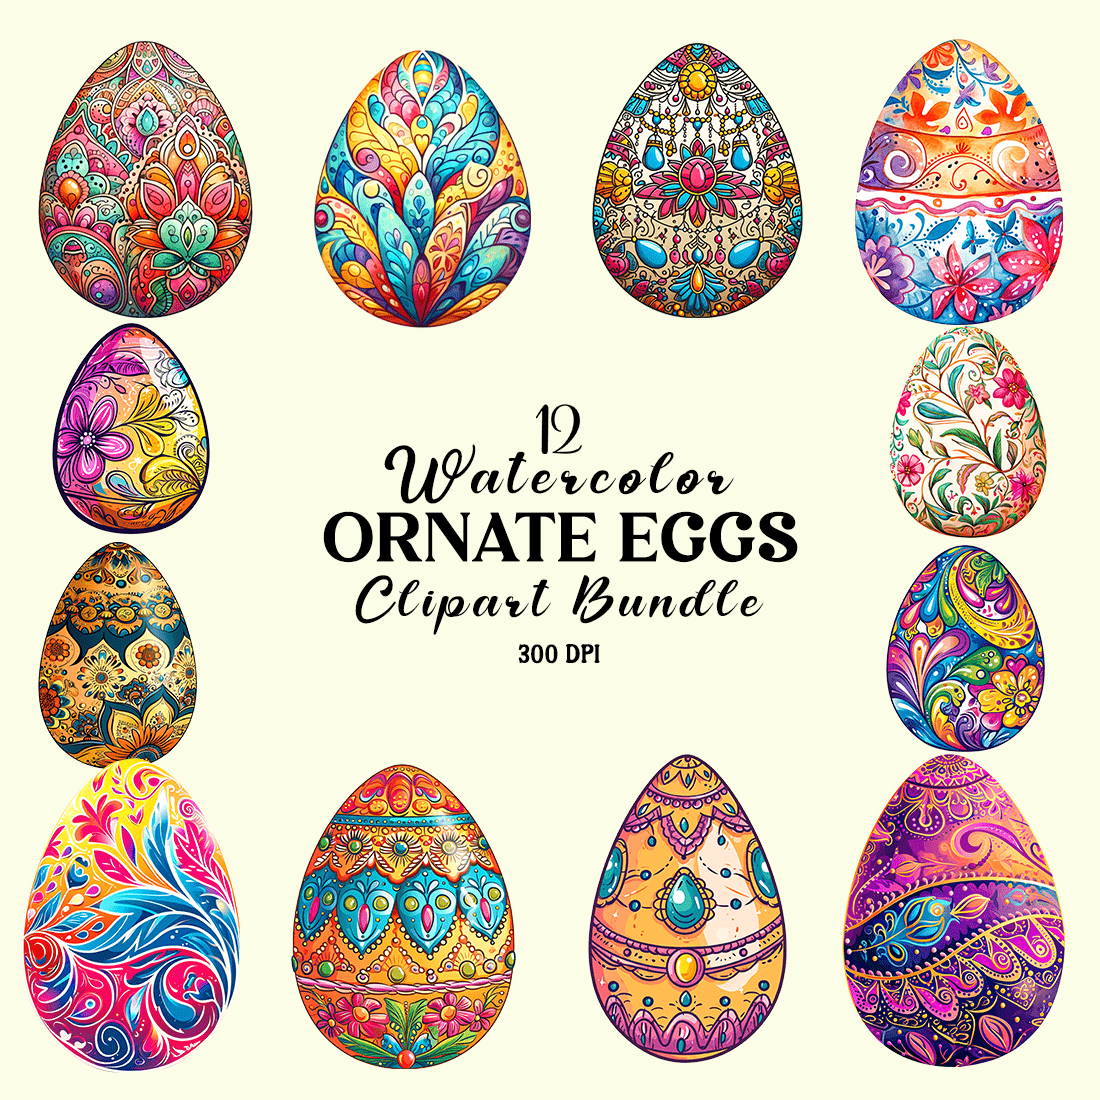 Watercolor Ornate Eggs Clipart Bundle cover image.